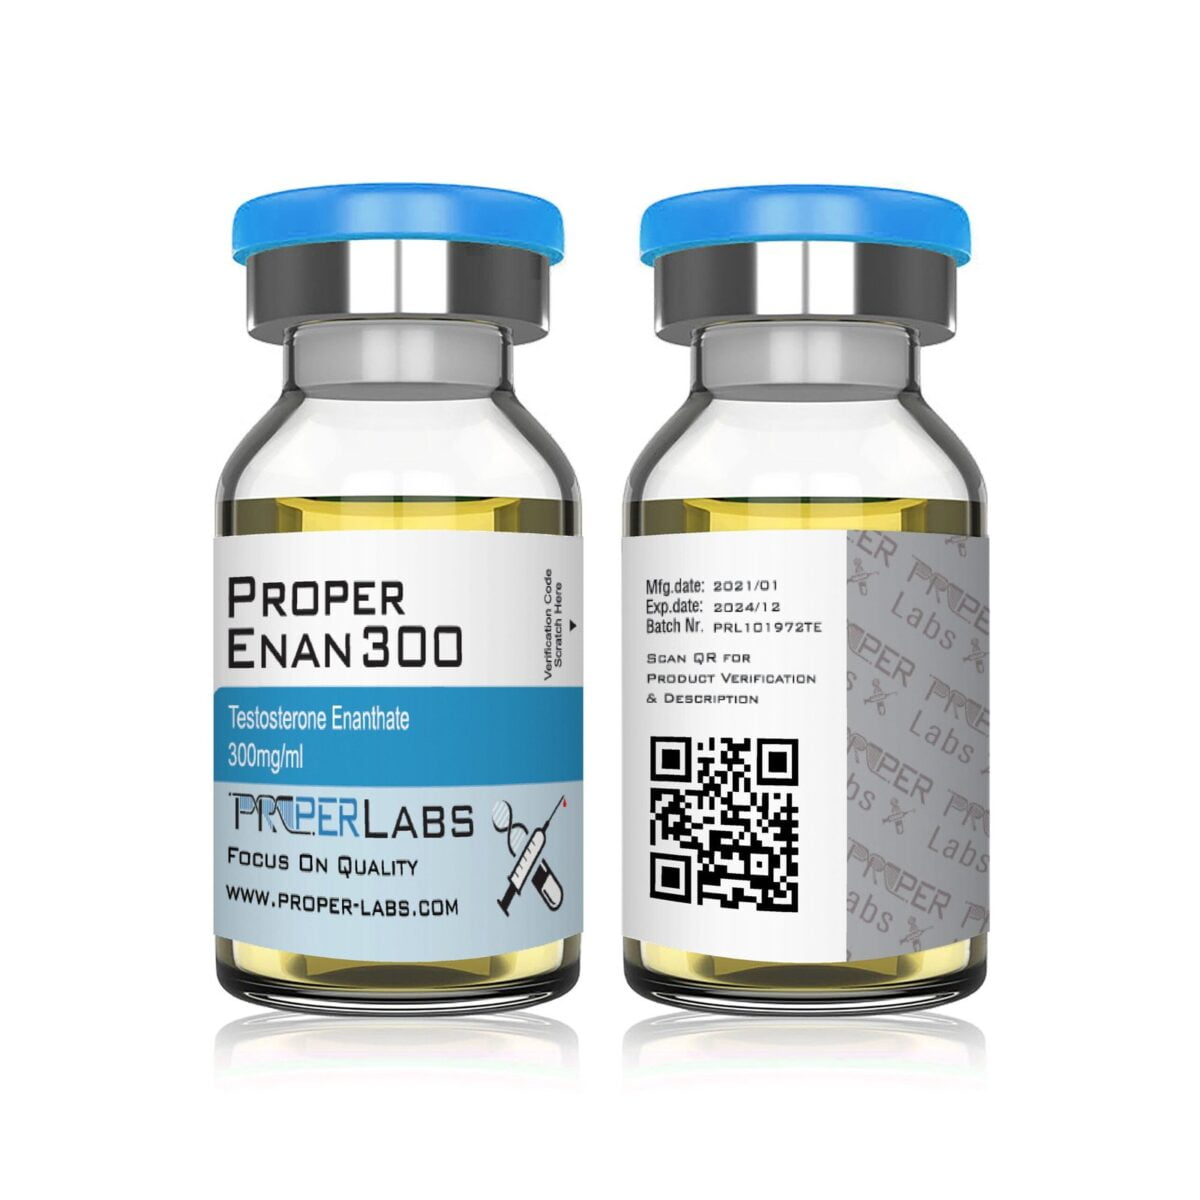 Testosterone Enanthate Proper Labs - ProperEnan 300mg